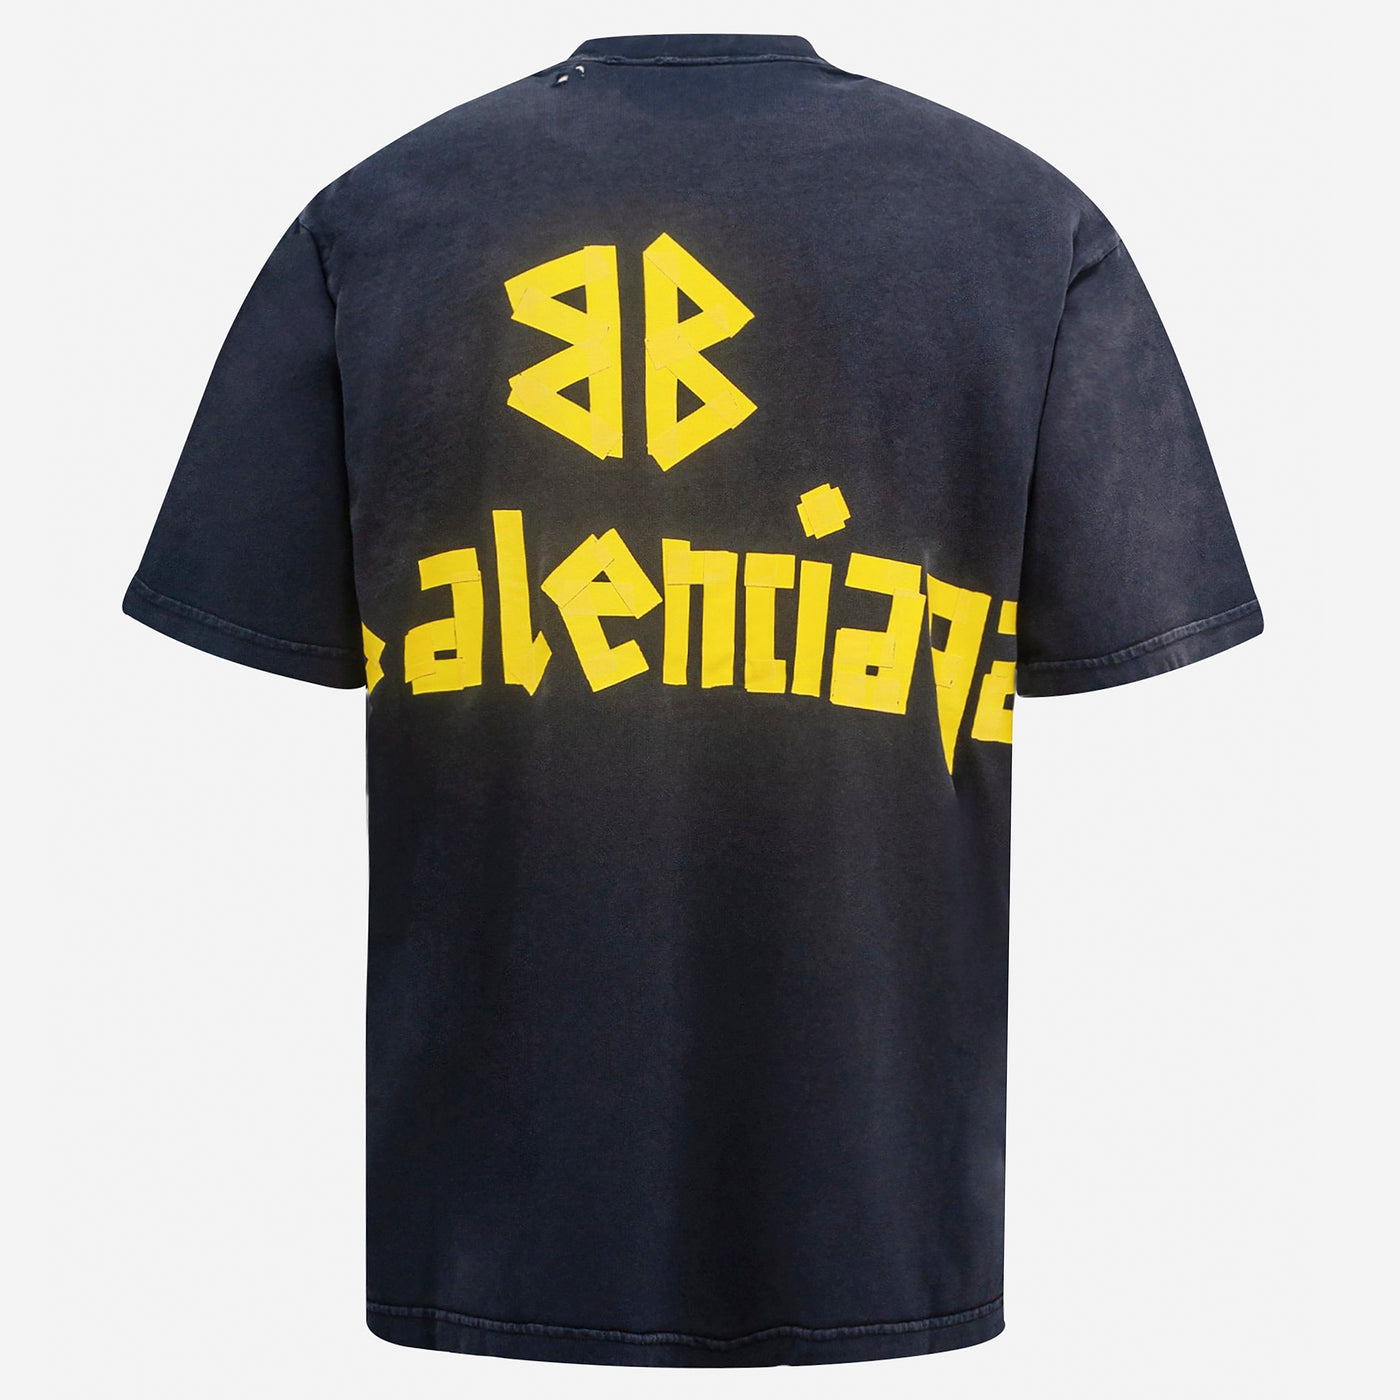 Balenciaga Tape Type T-Shirt